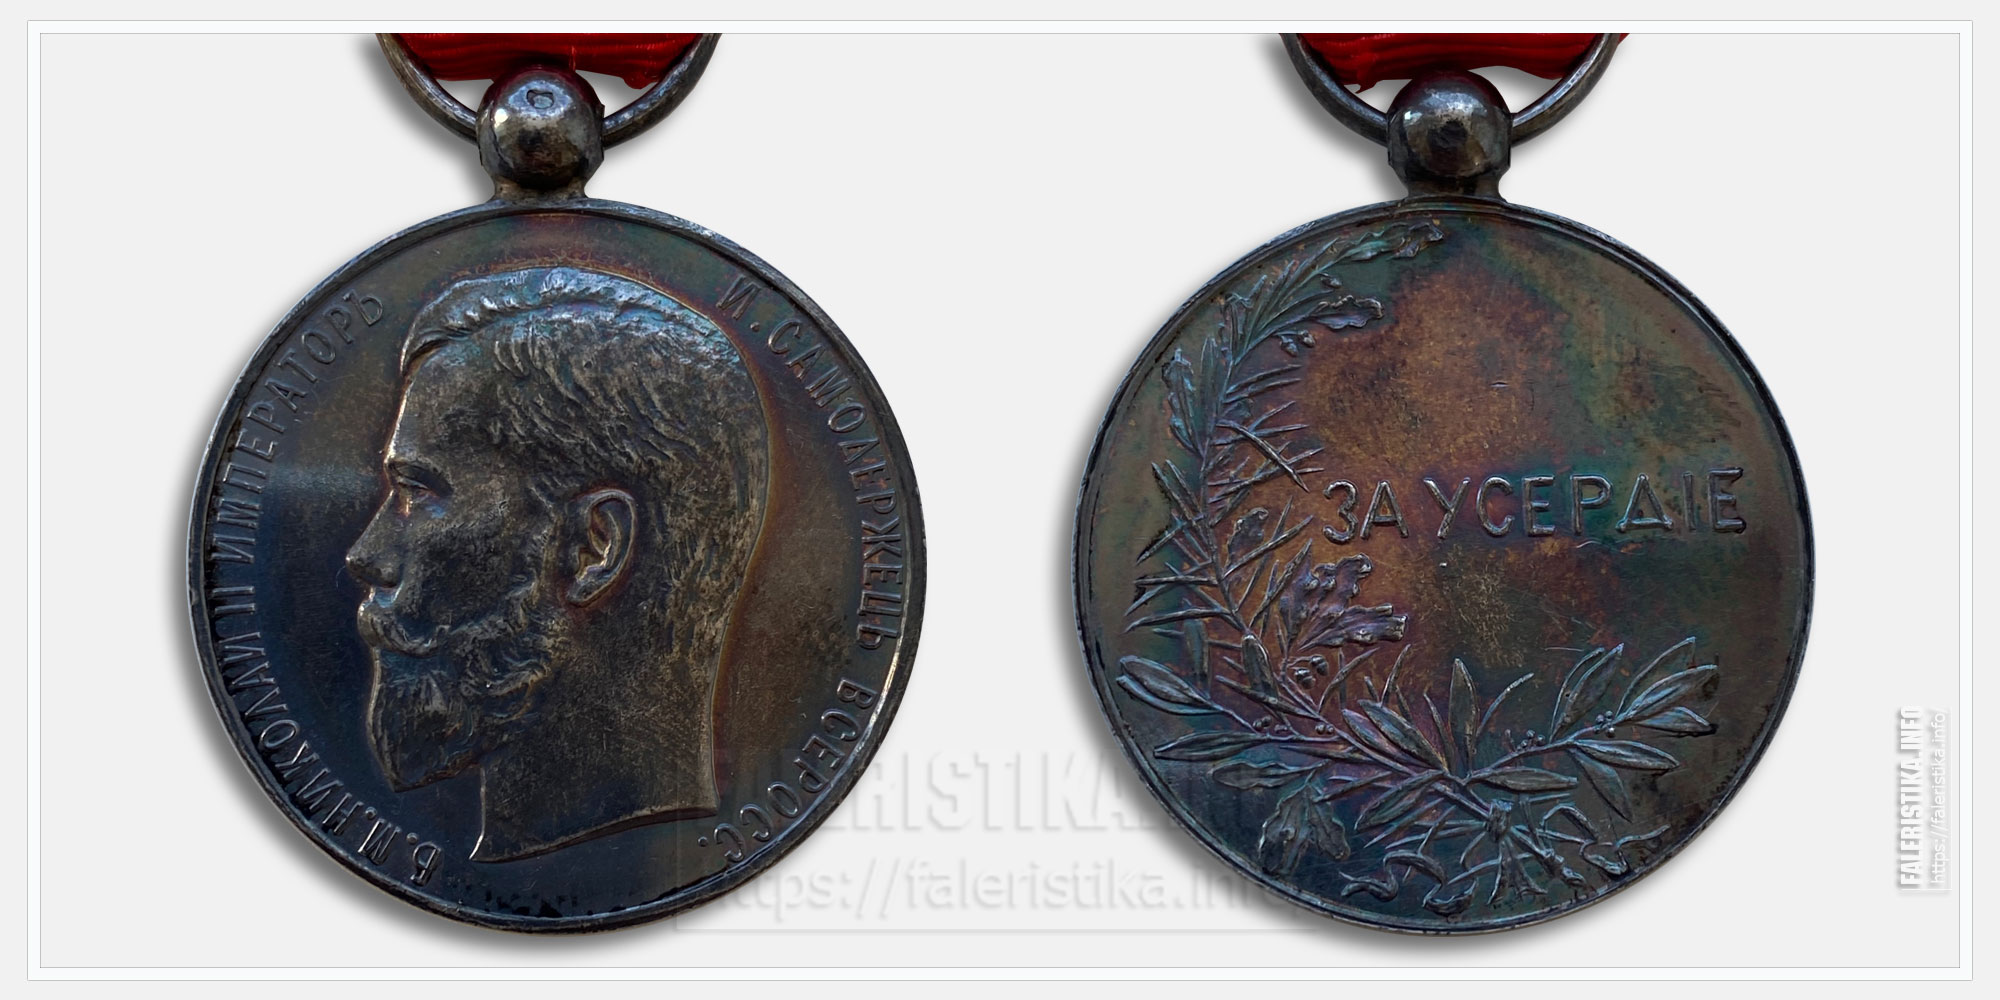 Медаль "За усердие" Николай II Серебро. Изготовлено во Франции